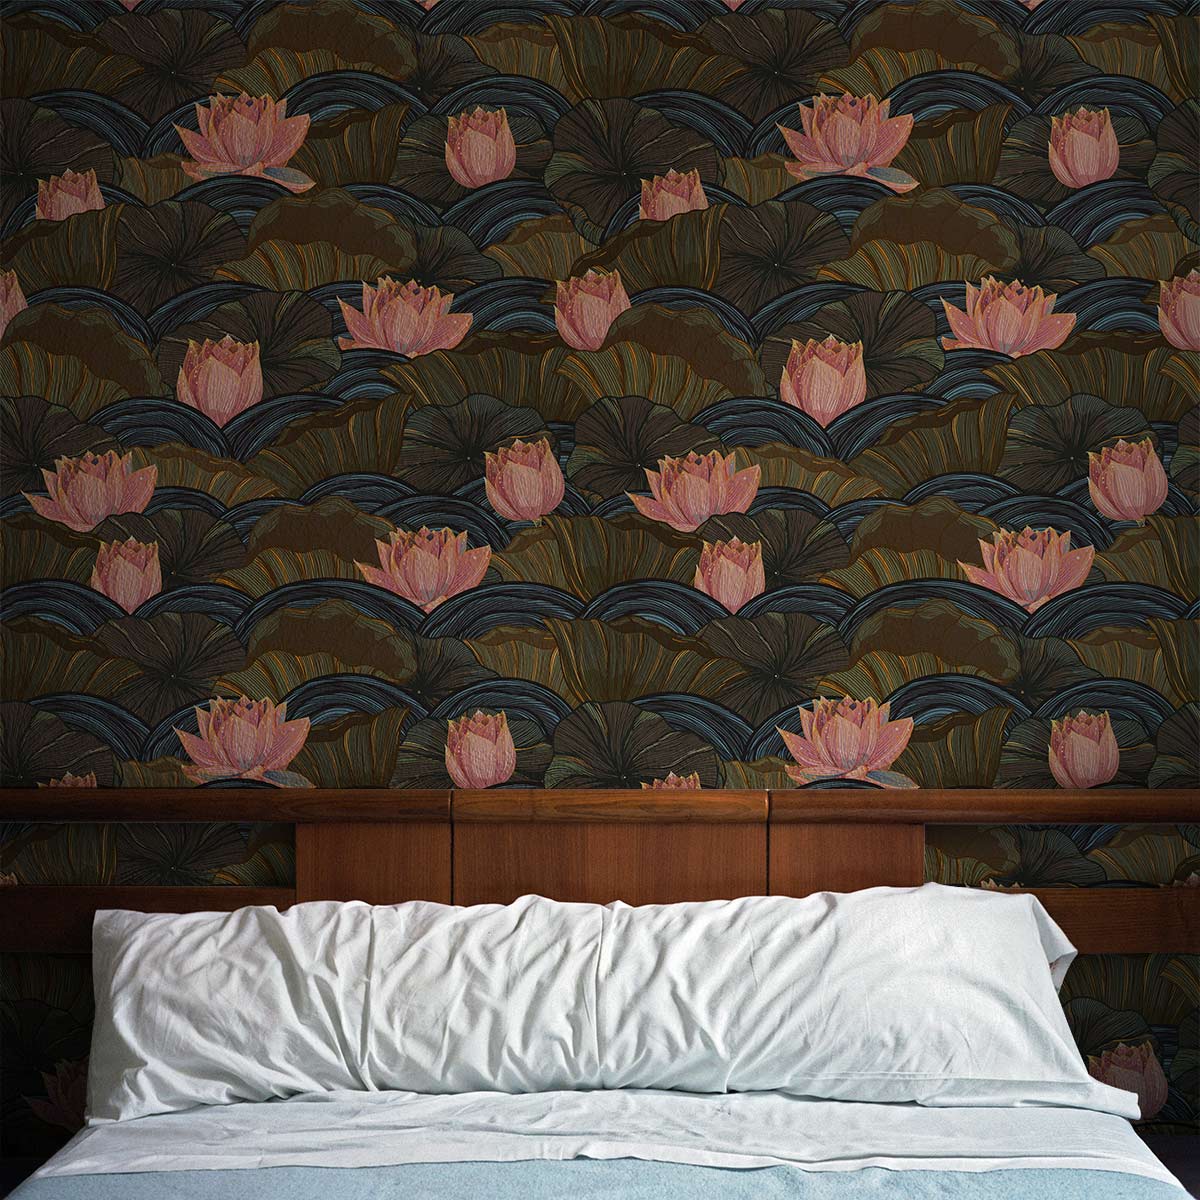 bloomy lotus wallpaper mural for bedroom decor